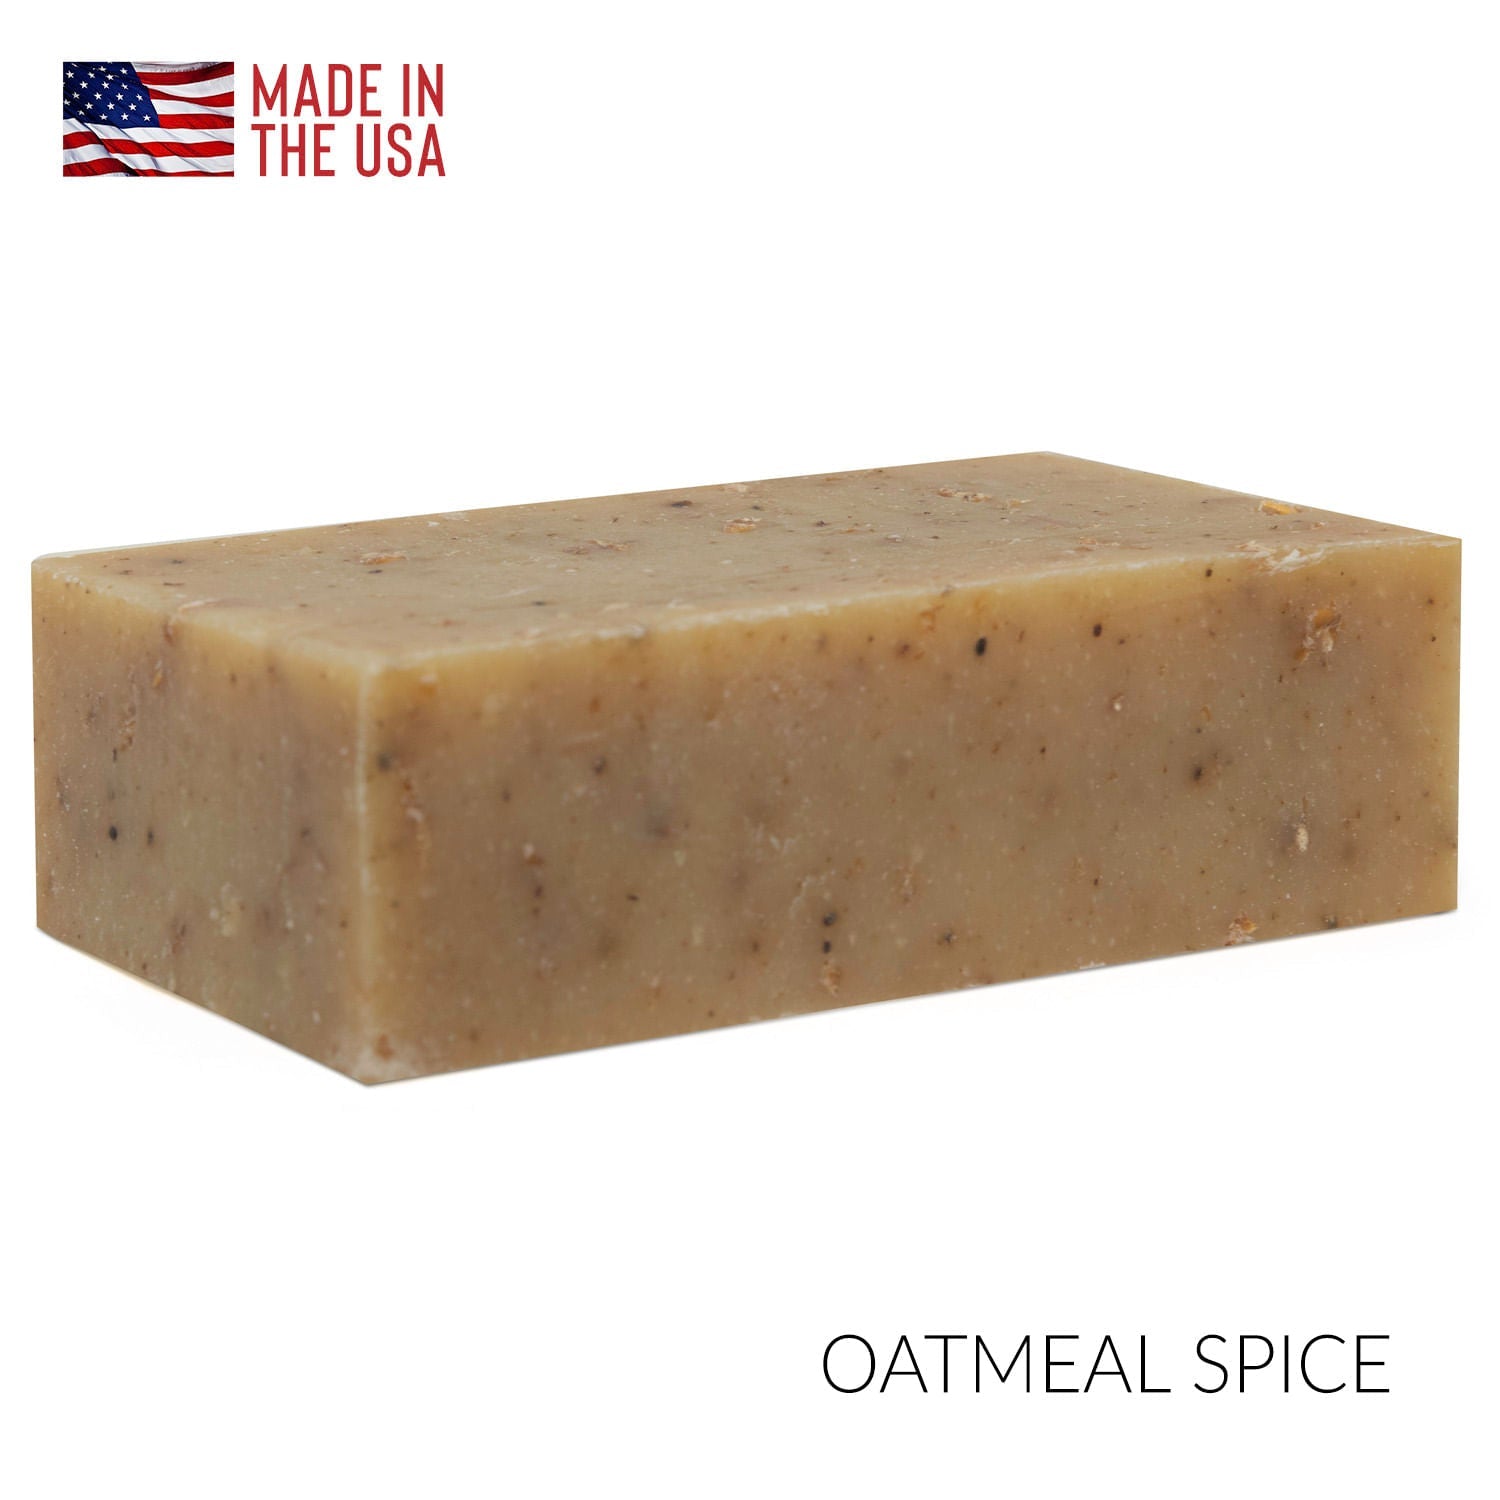 Oatmeal Spice bar soap